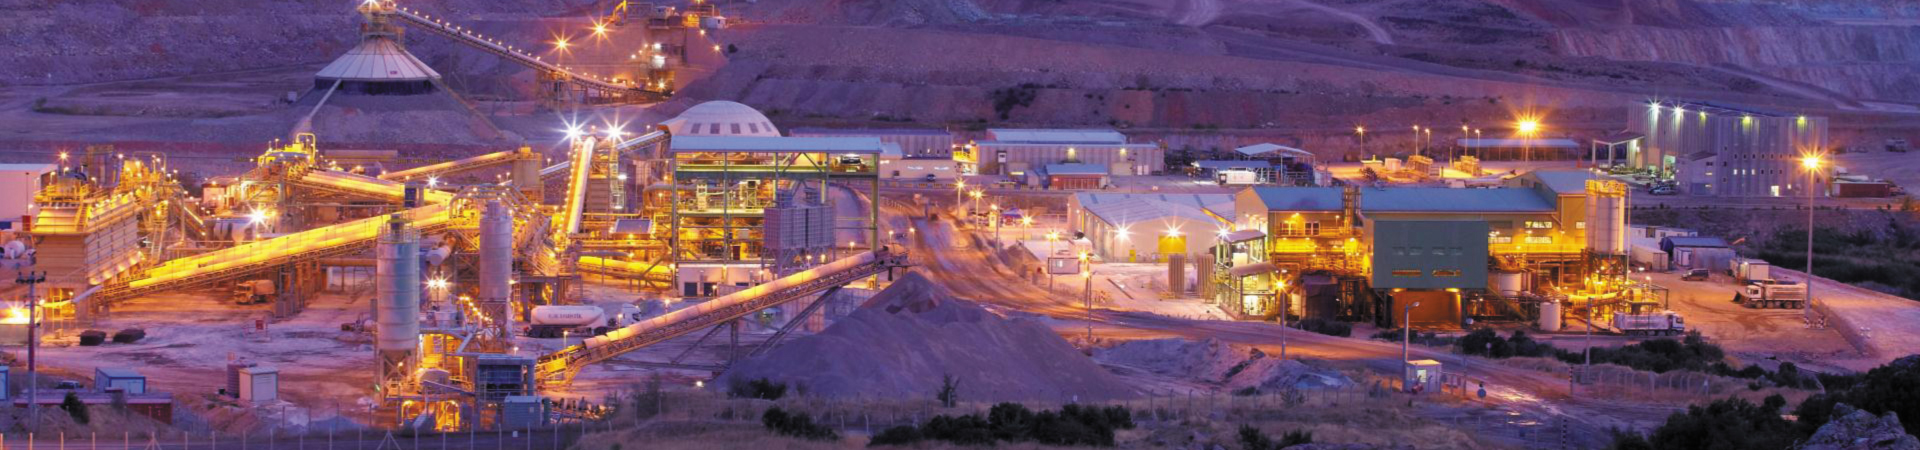 Iron ore crushing plant in Peru